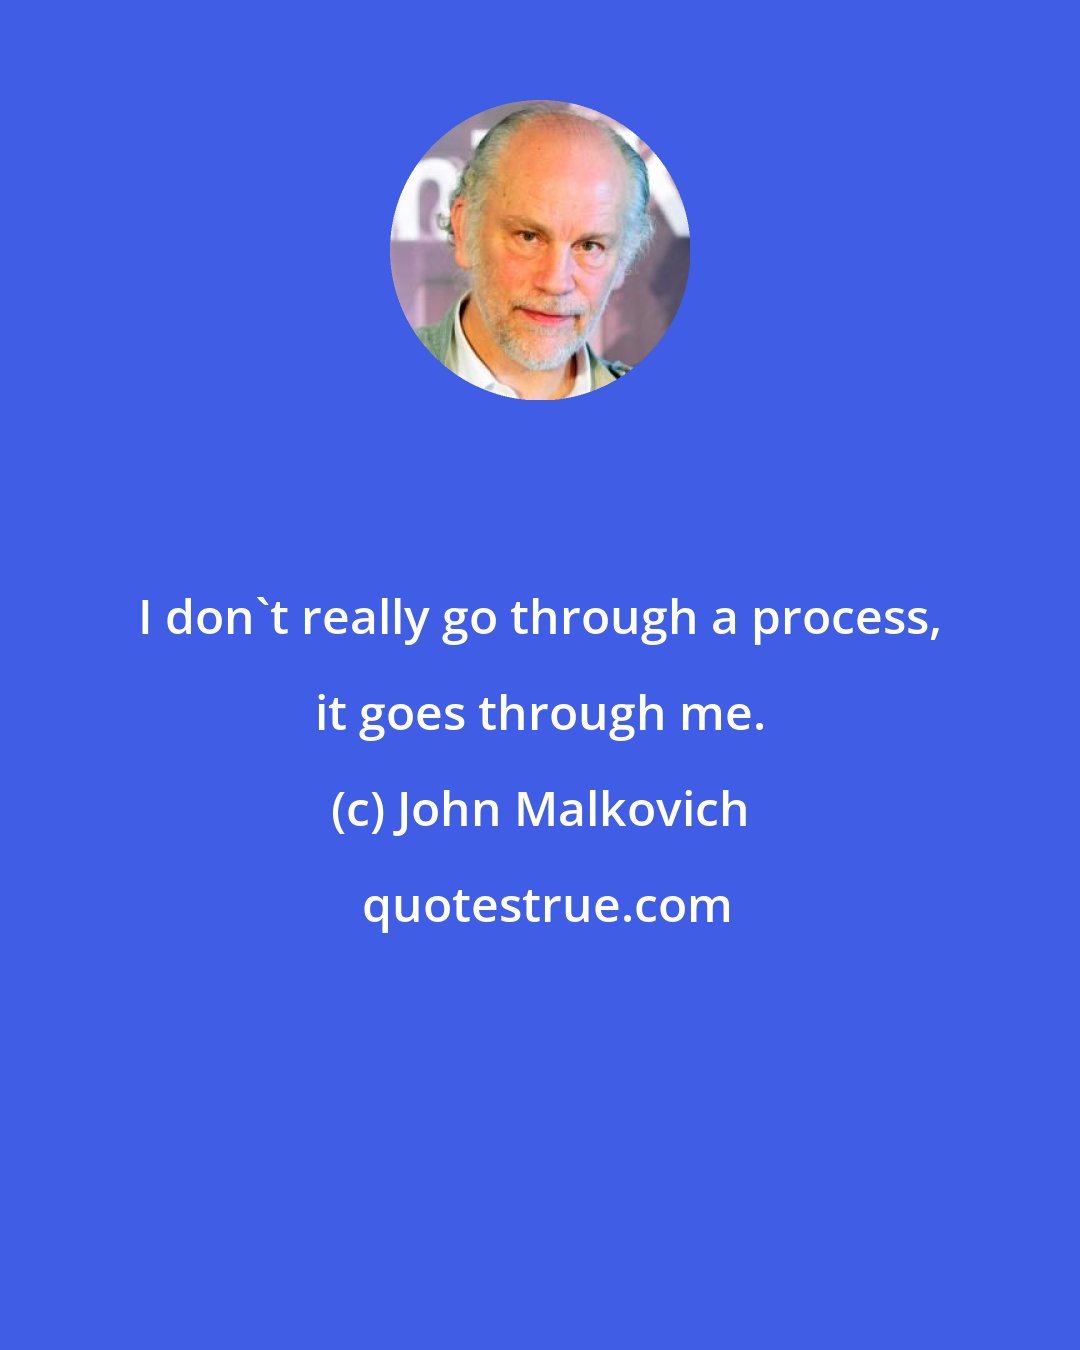 John Malkovich: I don't really go through a process, it goes through me.